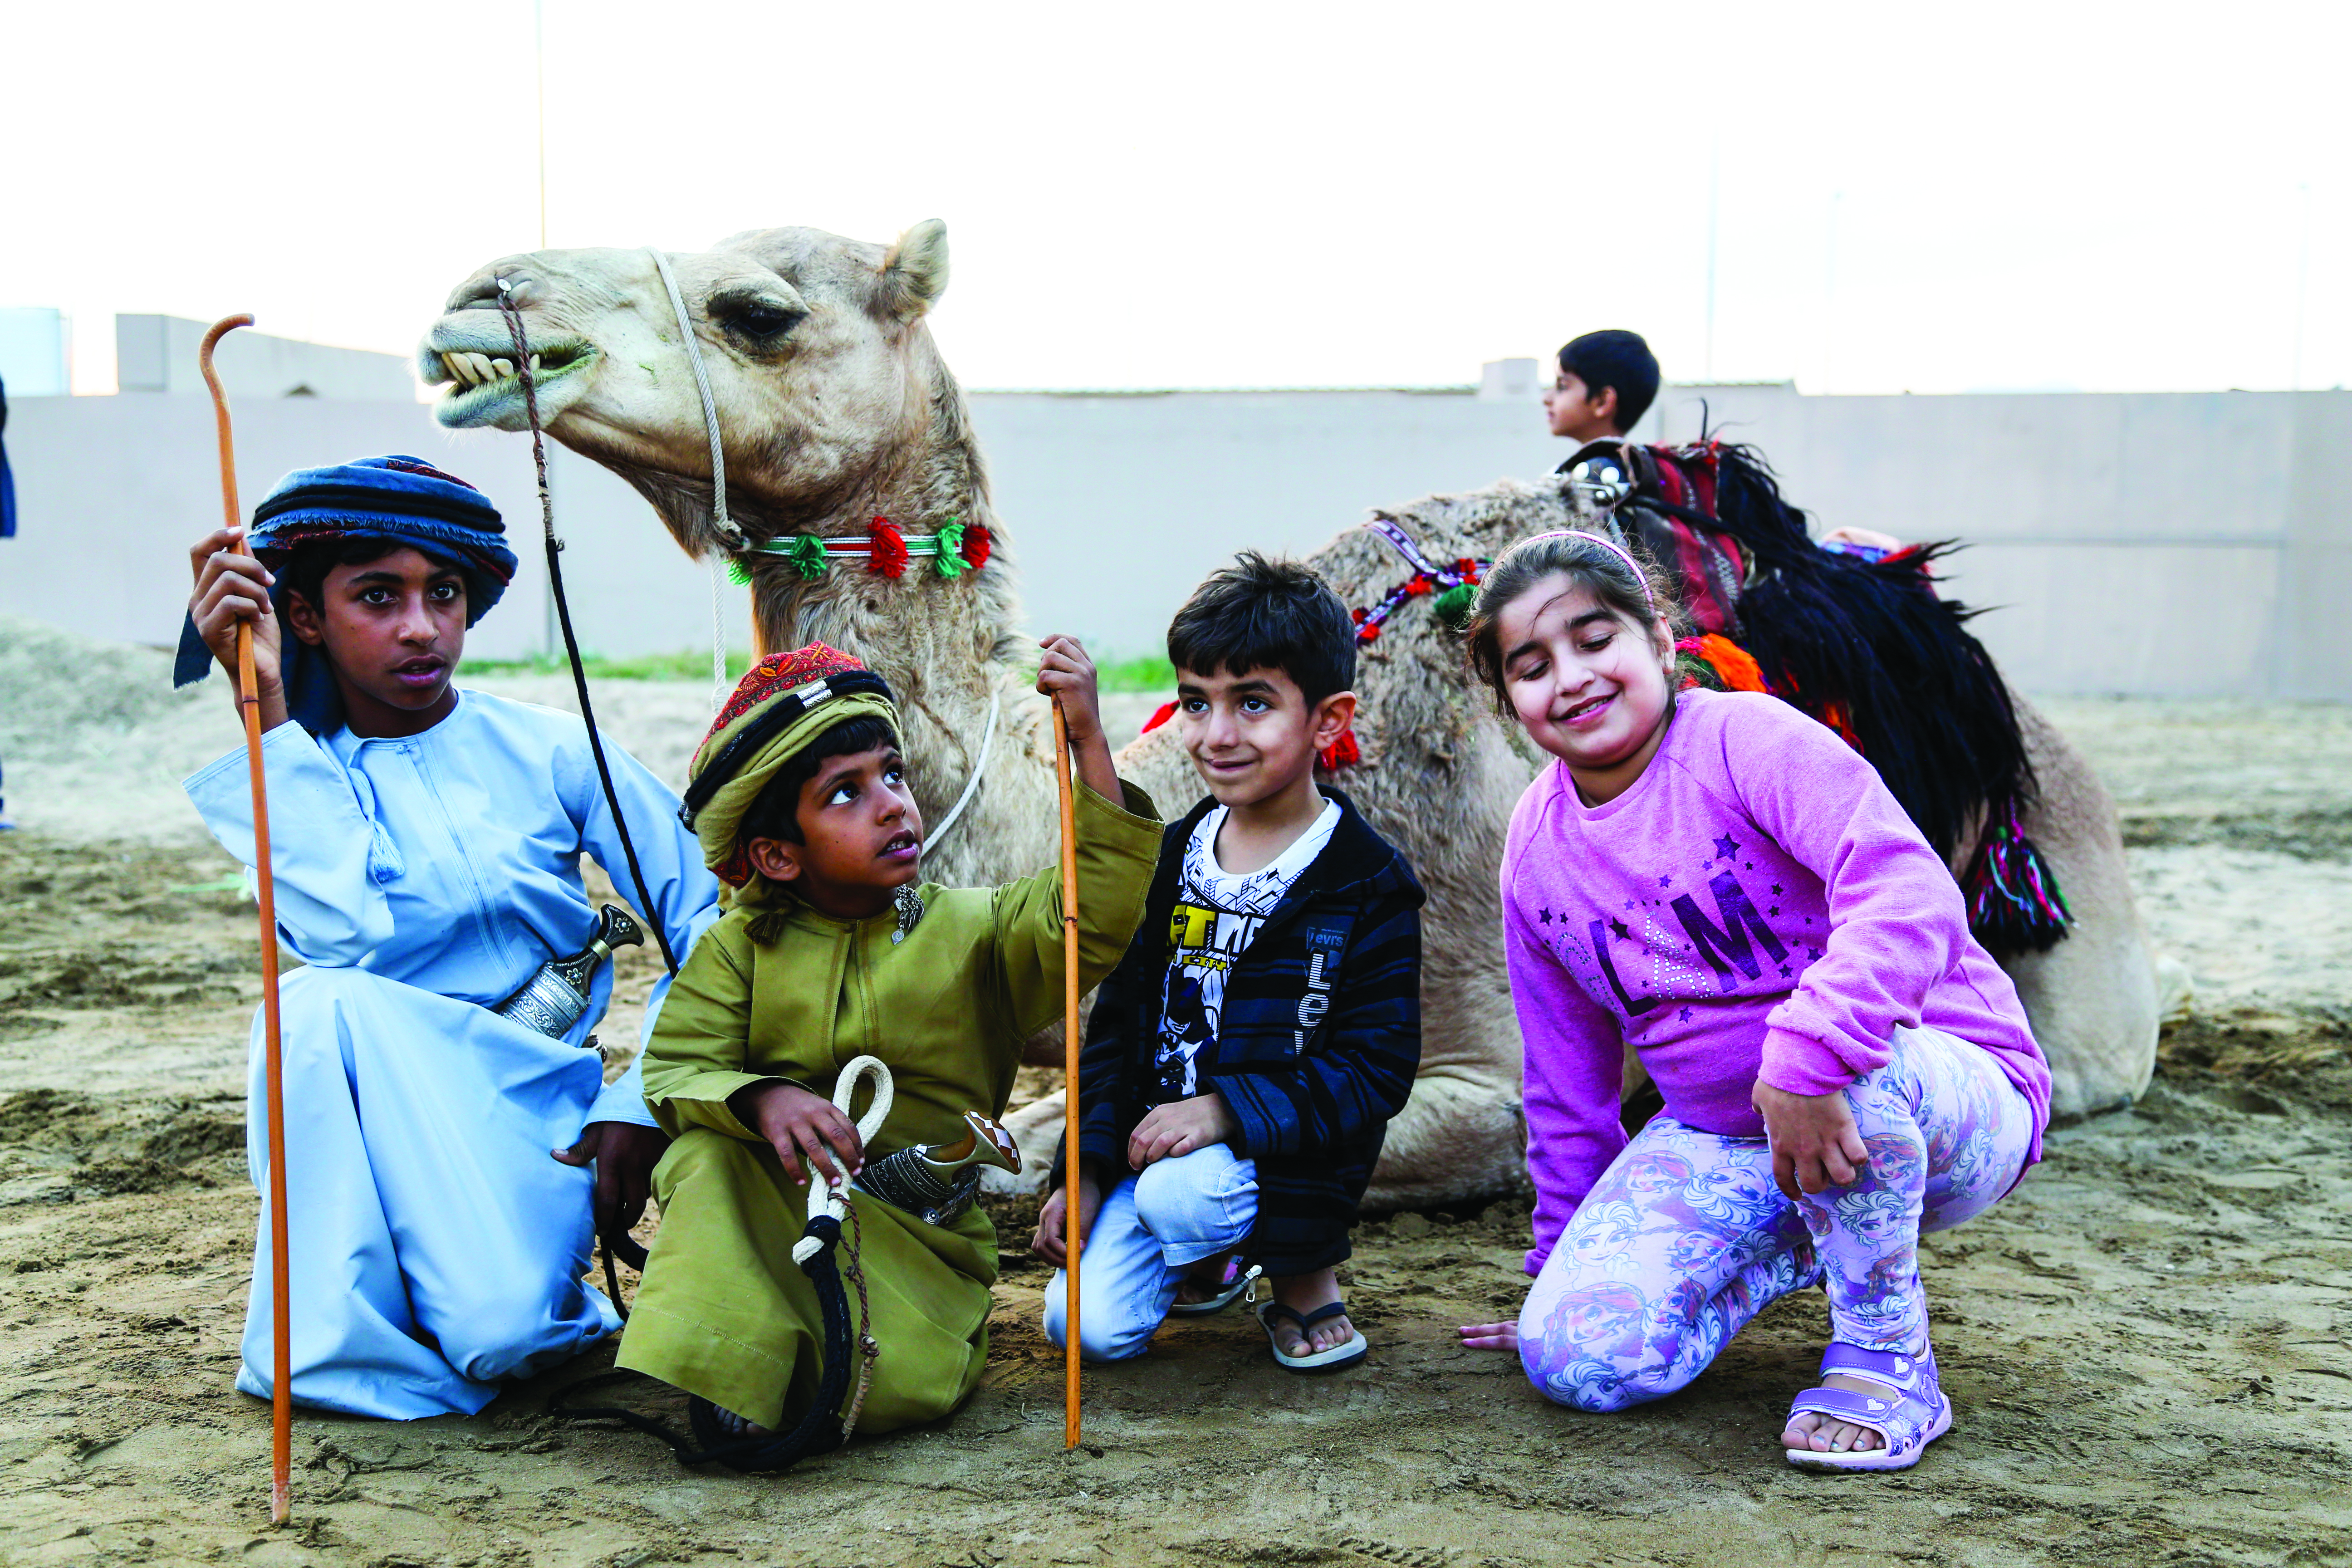 #OmanPride: Fun time for children at Muscat Festival